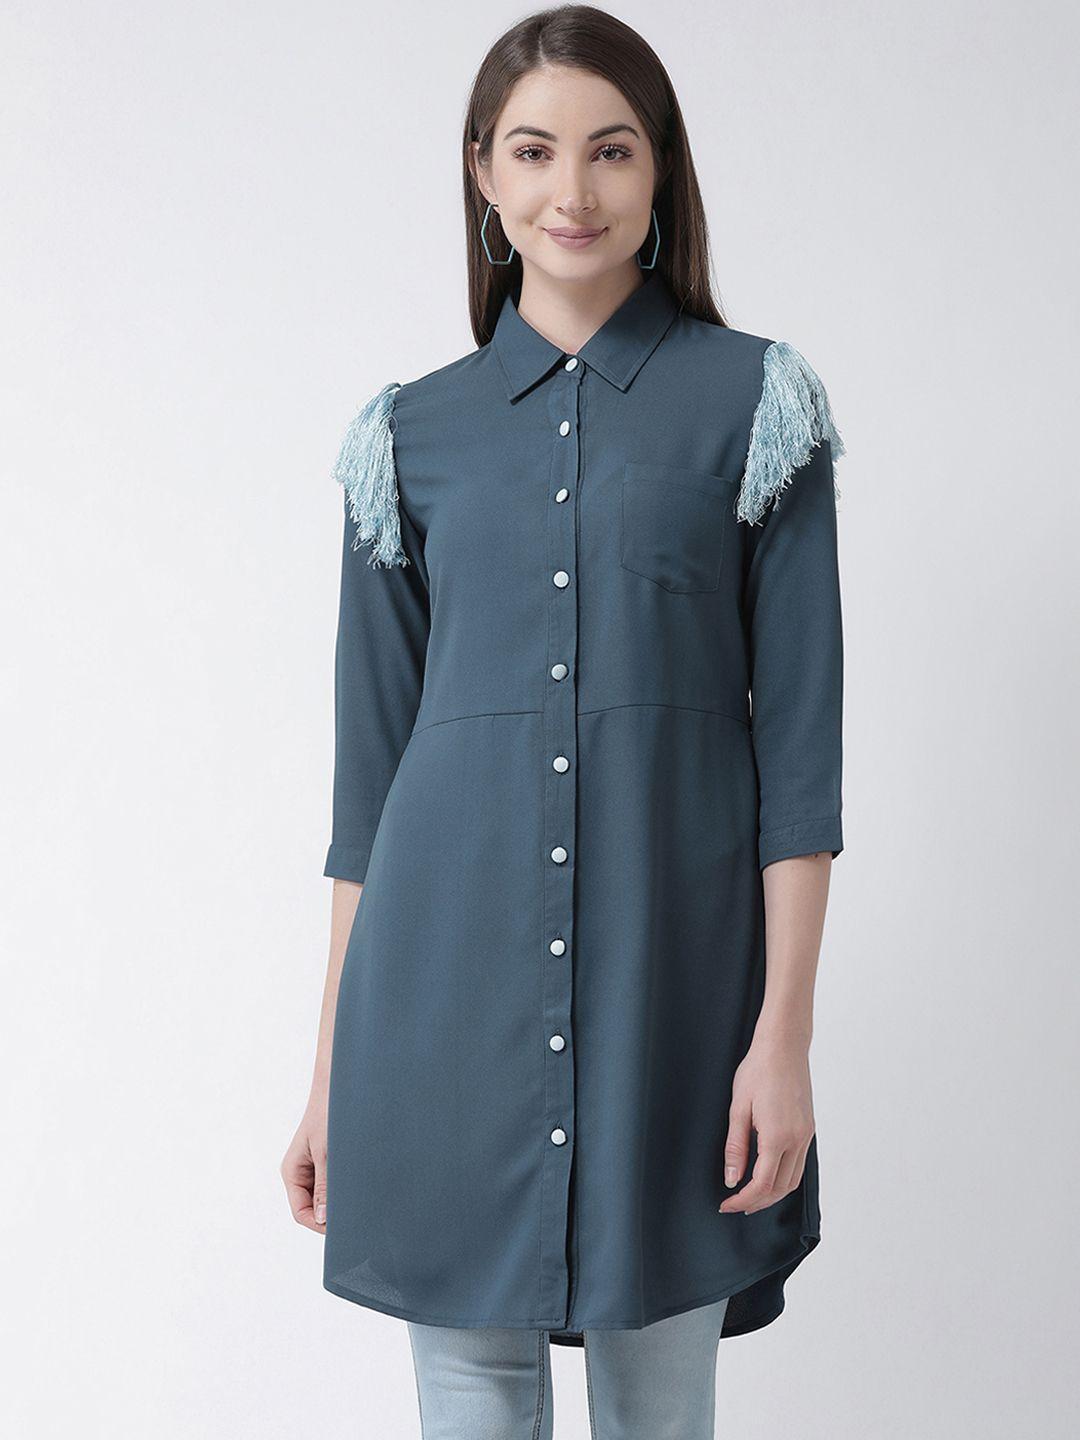 kassually women blue regular fit solid casual shirt